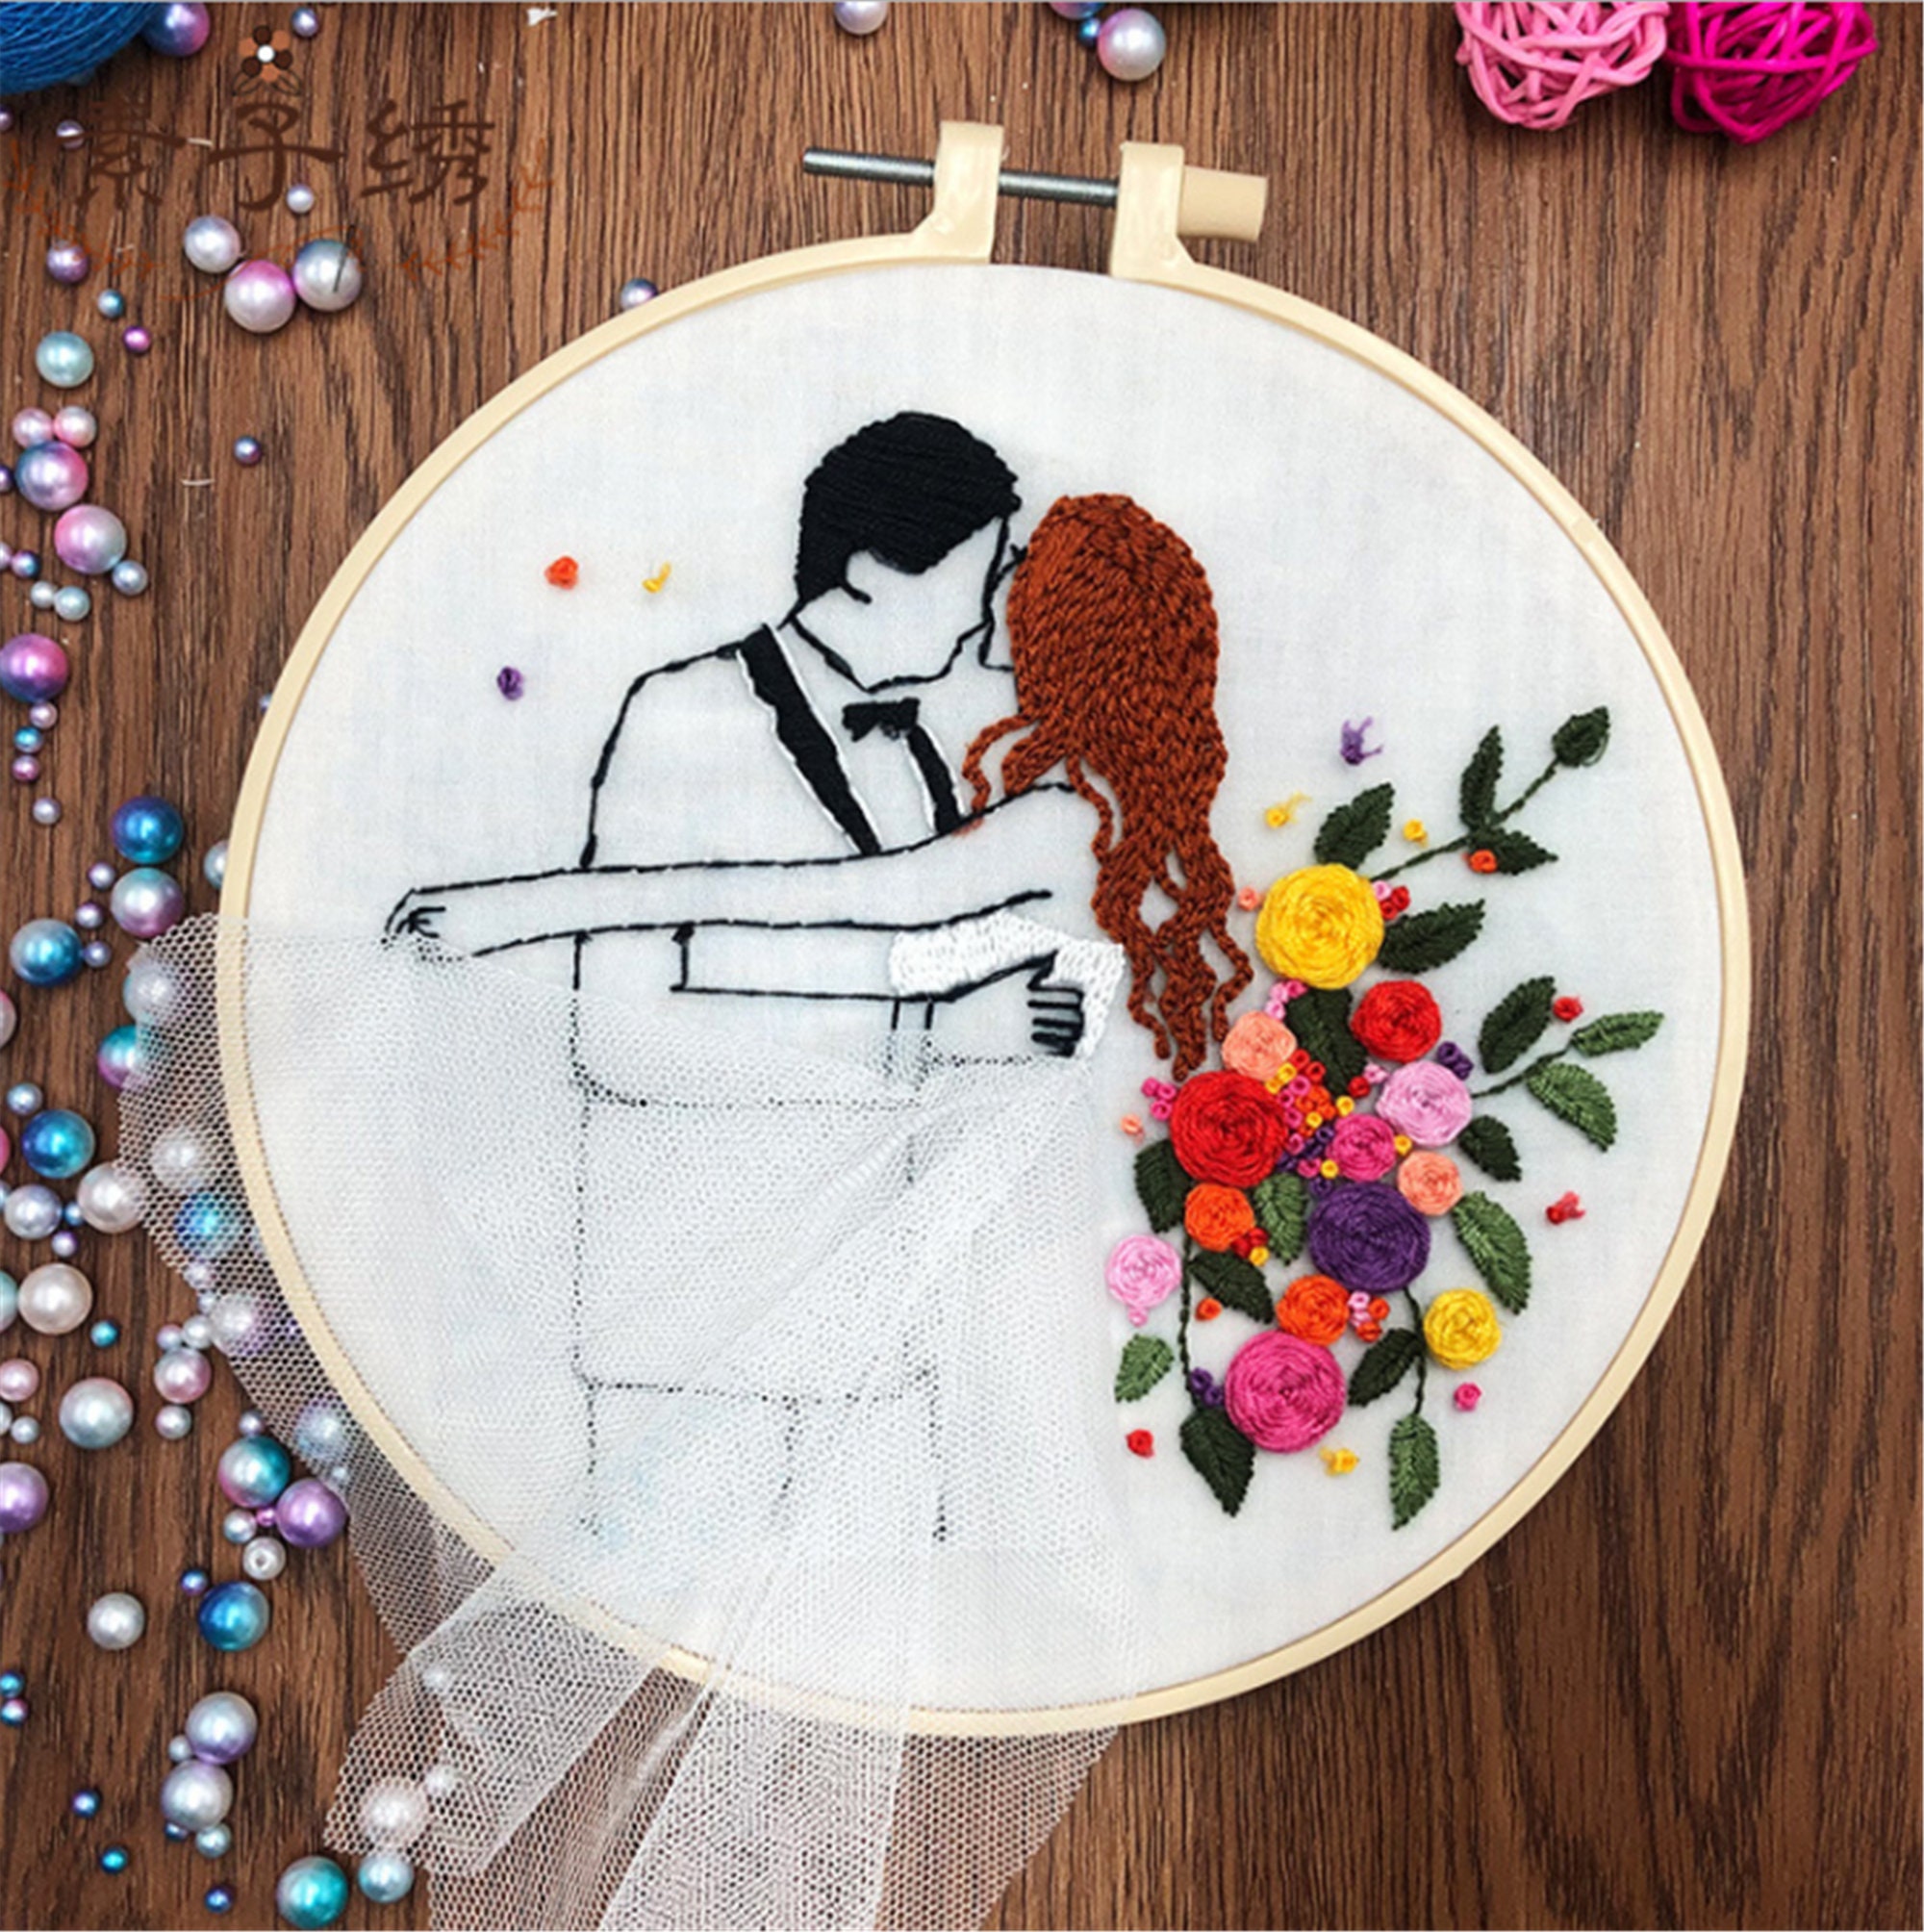 Wedding European Beginner Embroidery Kit Dream Wedding - Etsy